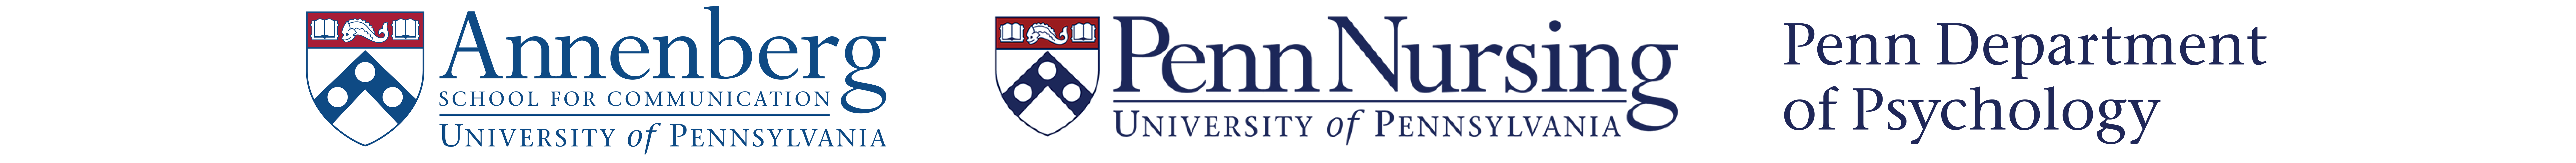 Logos of the Annenberg School for Communication, Penn Nursing, and Penn Department of Psychology